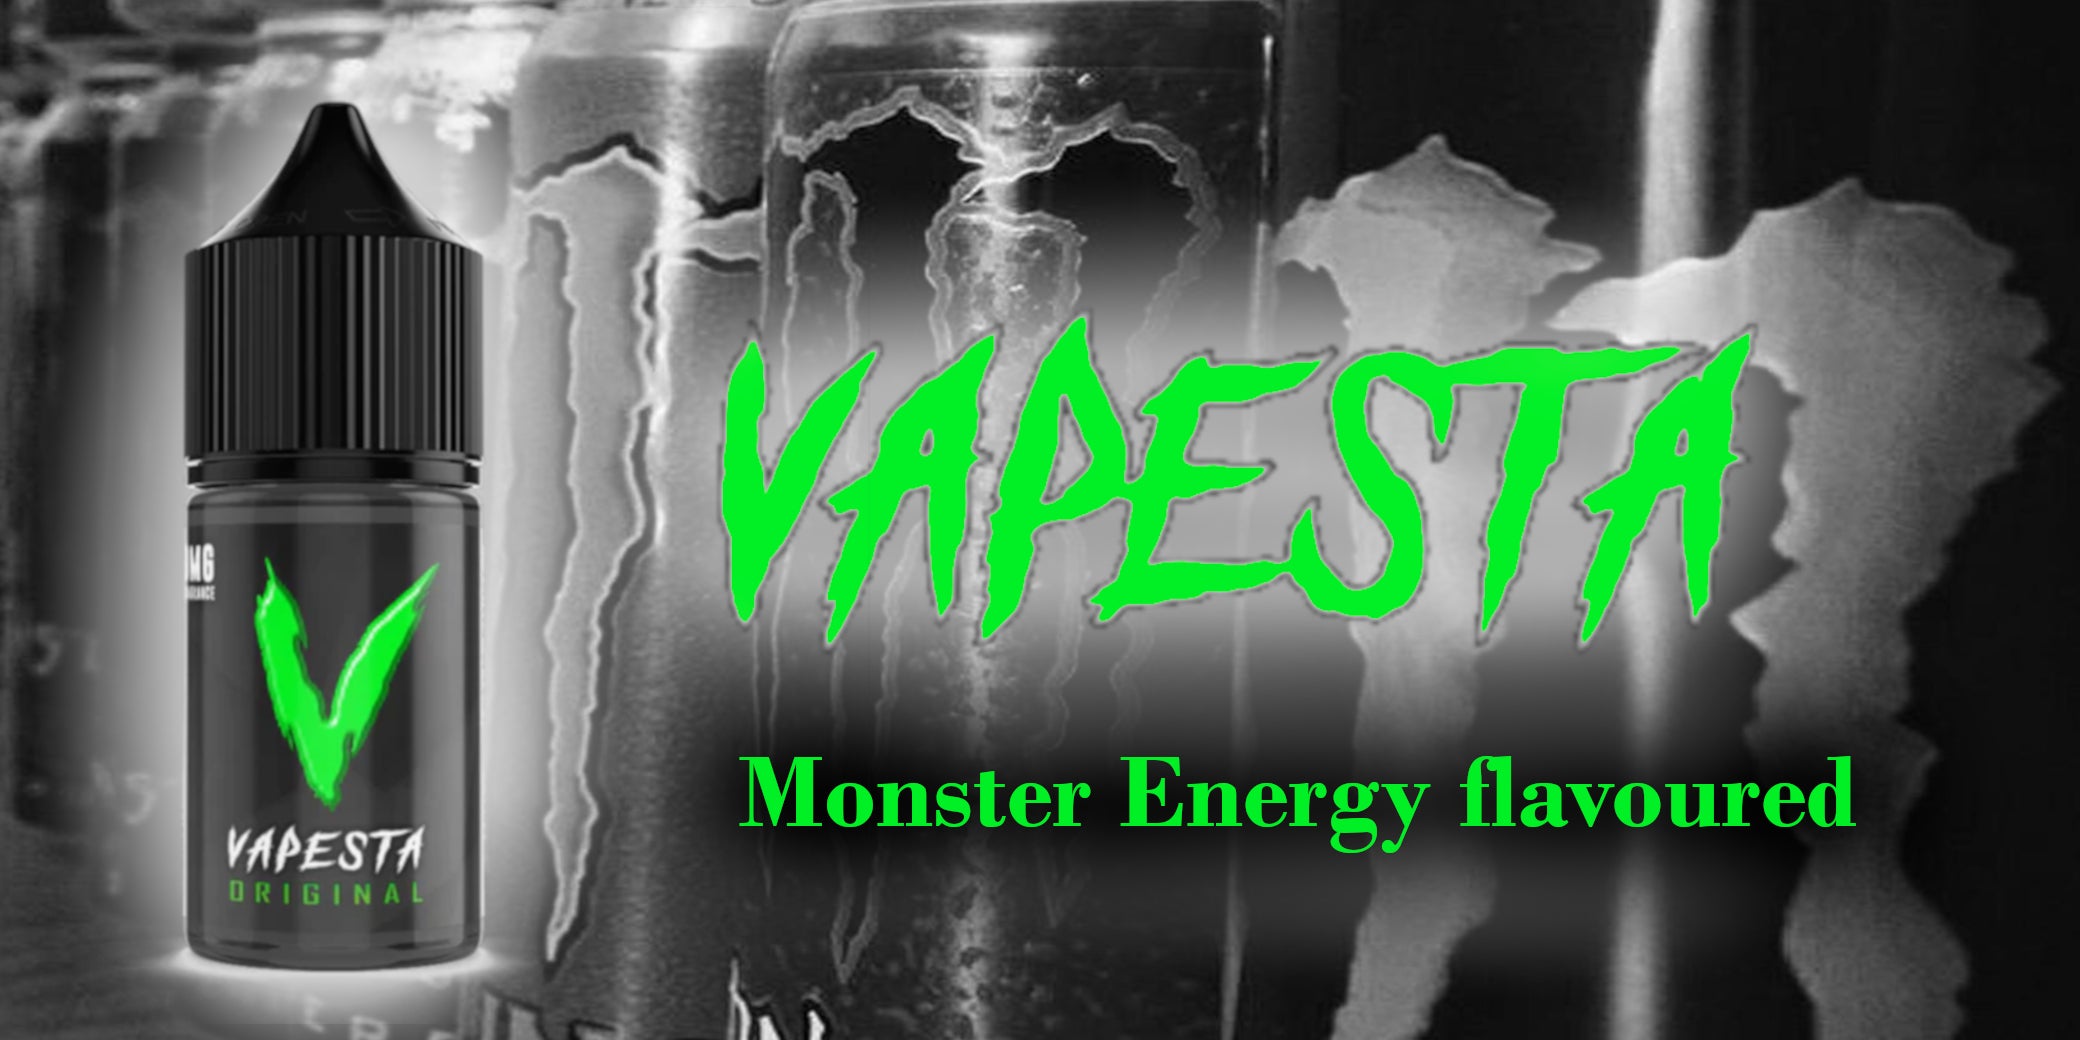 Vapesta: An Energetic Vaping Experience